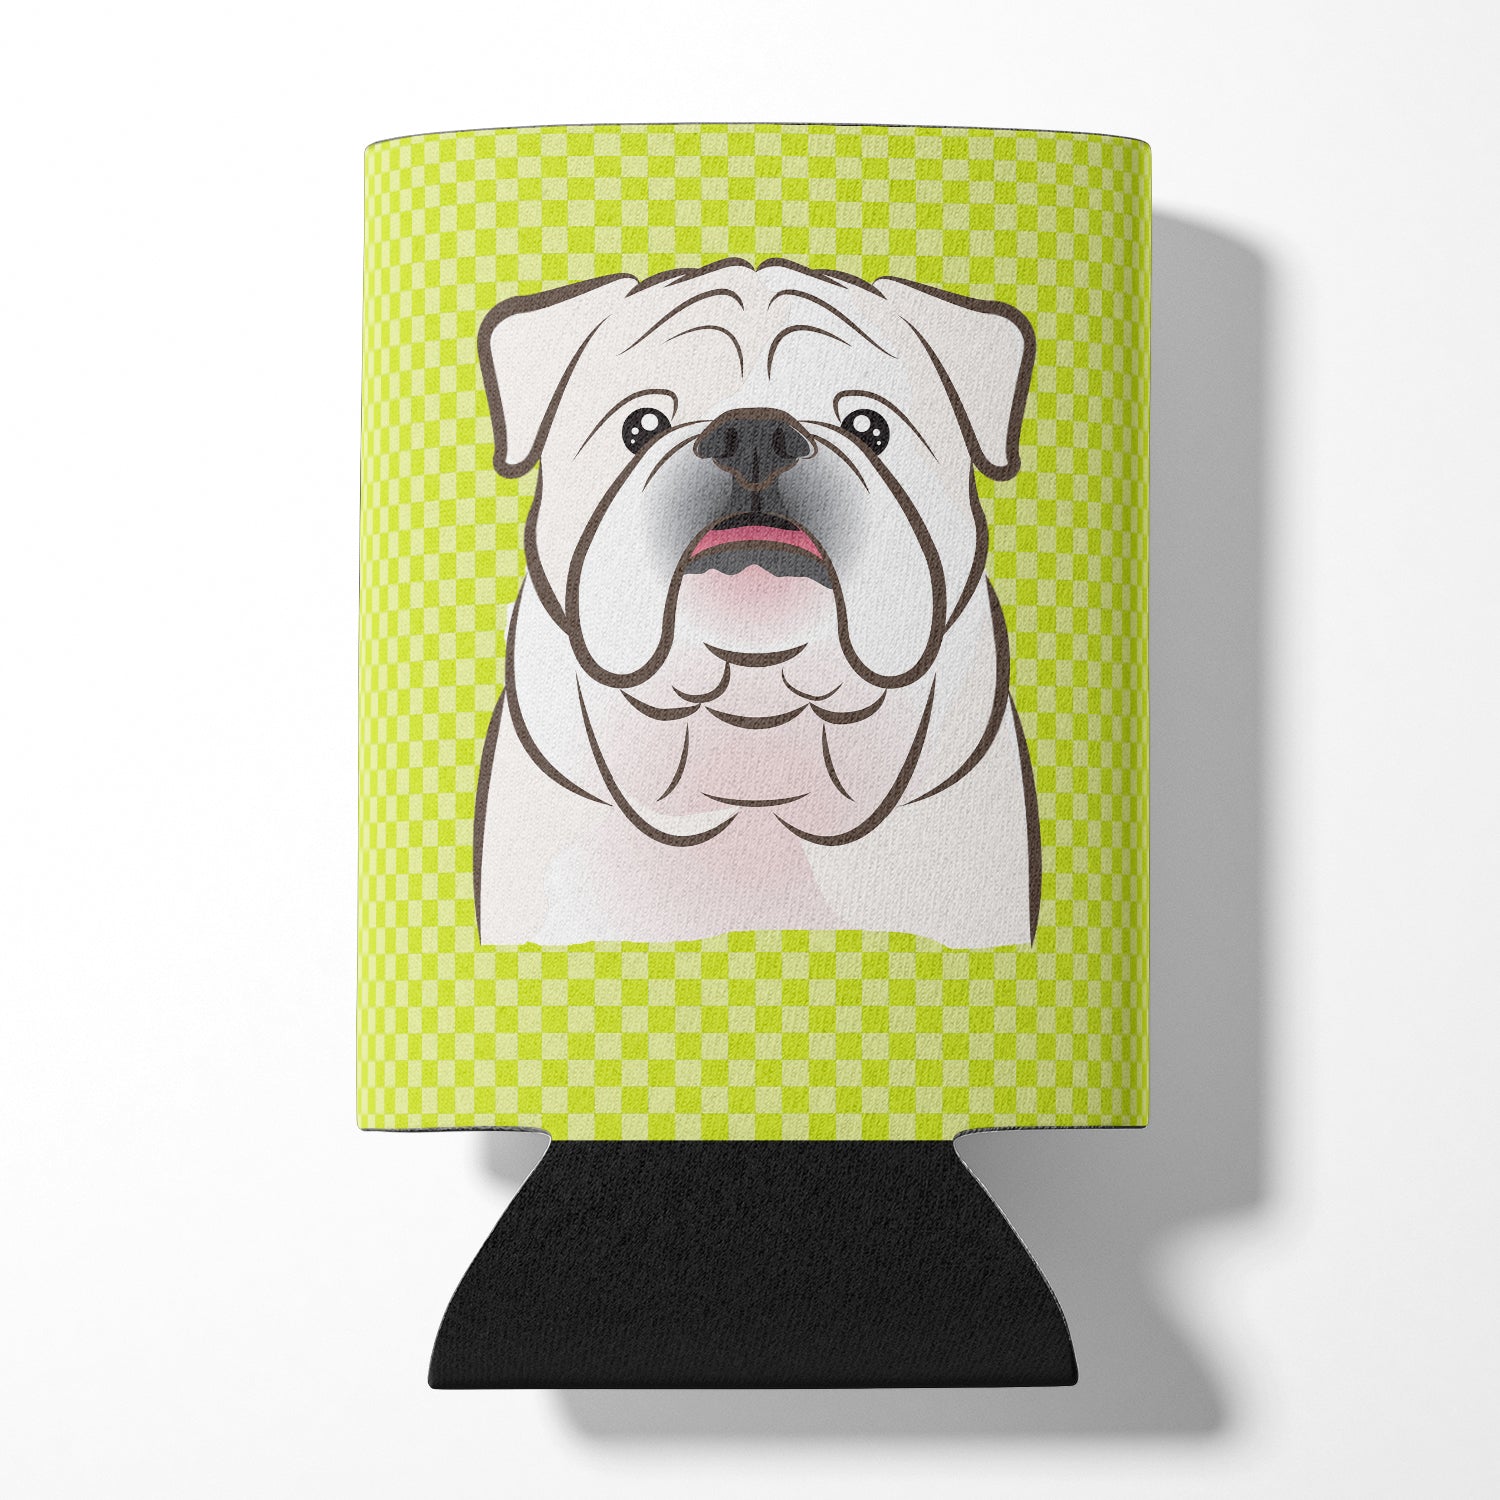 Checkerboard Lime Green White English Bulldog Can ou Bottle Hugger BB1282CC